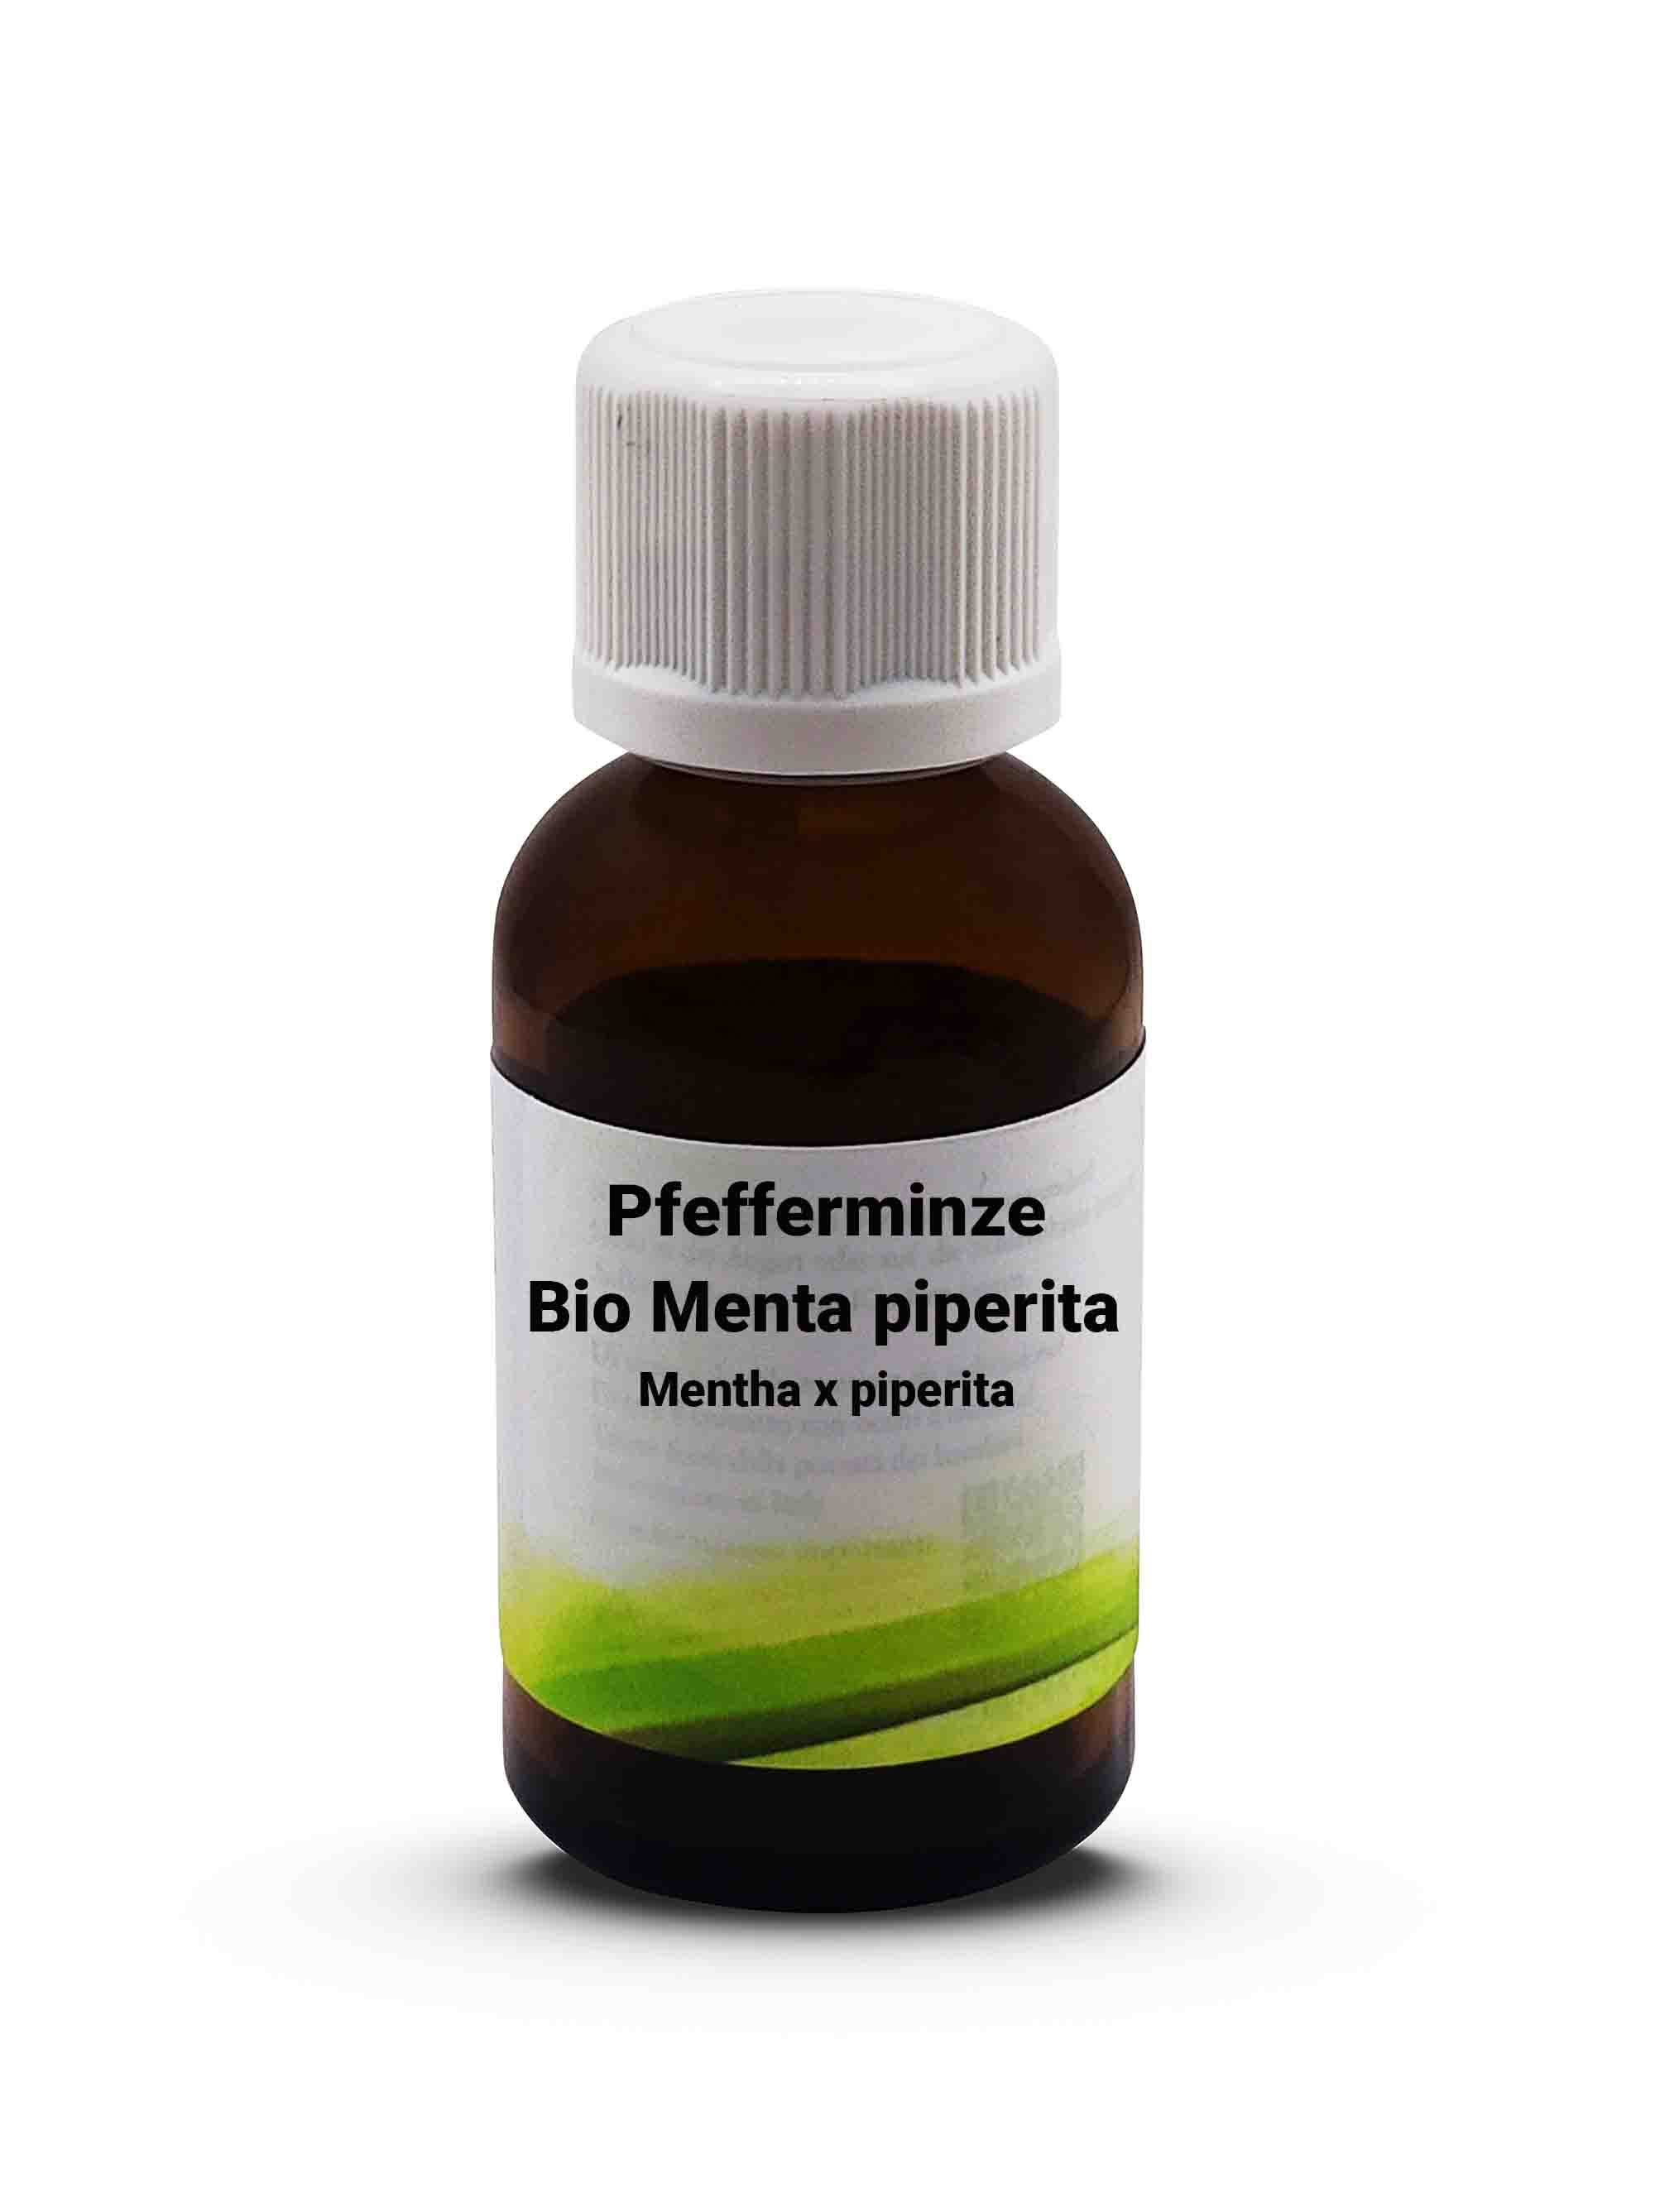 Bio Menta piperita - Mentha x piperita